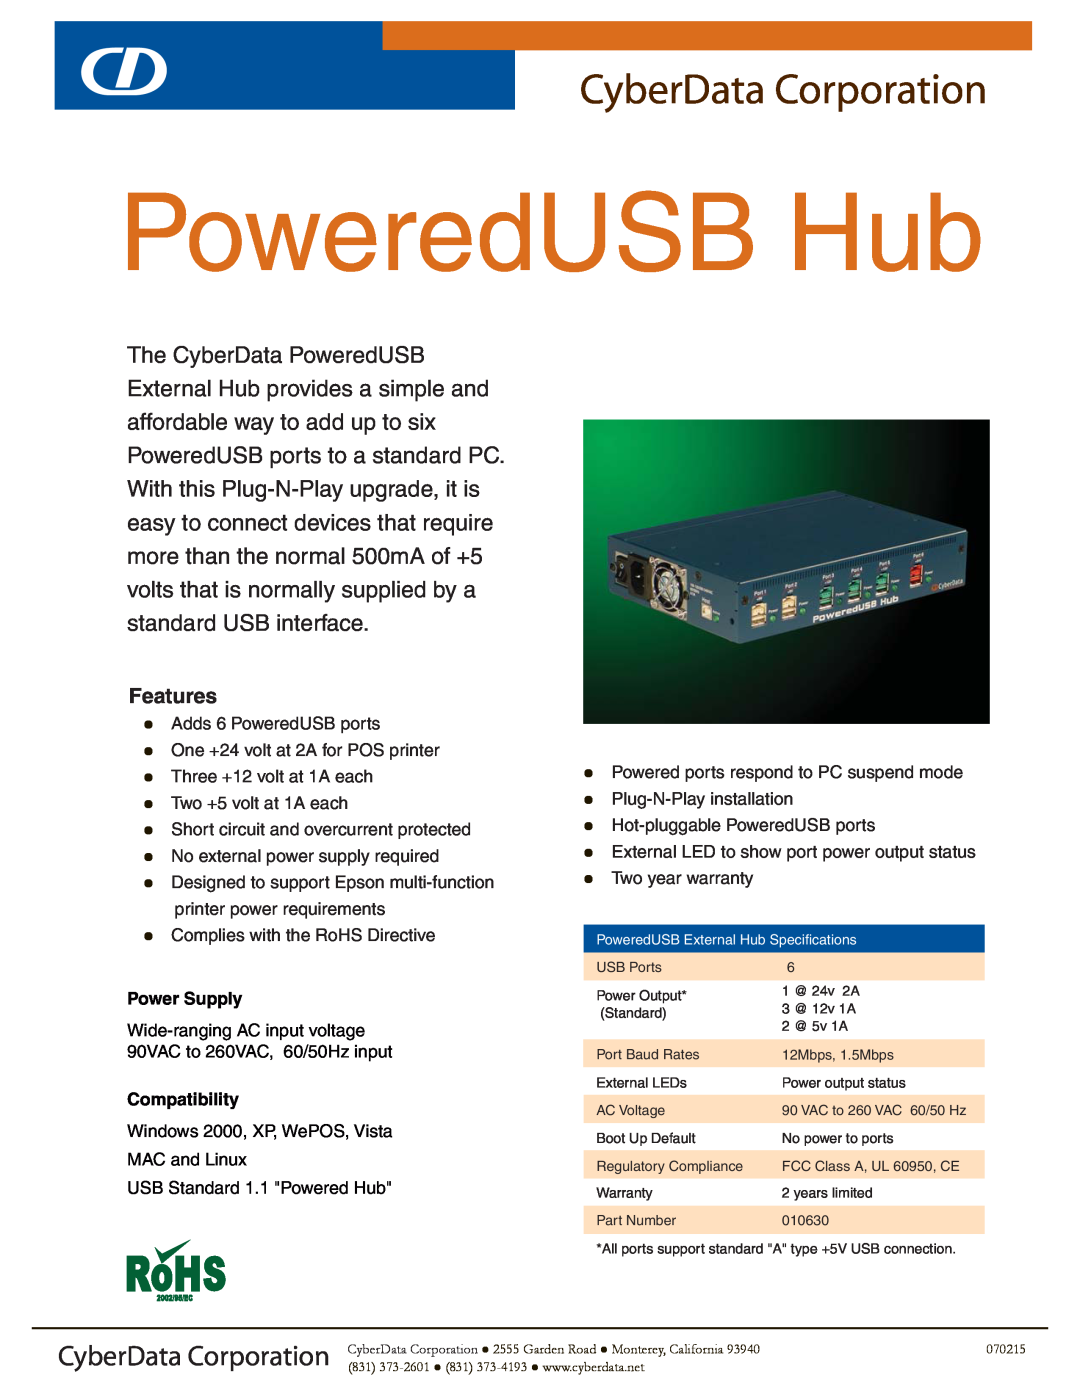 CyberData PoweredUSB Hub warranty CyberData Corporation, Features, Power Supply, Compatibility 